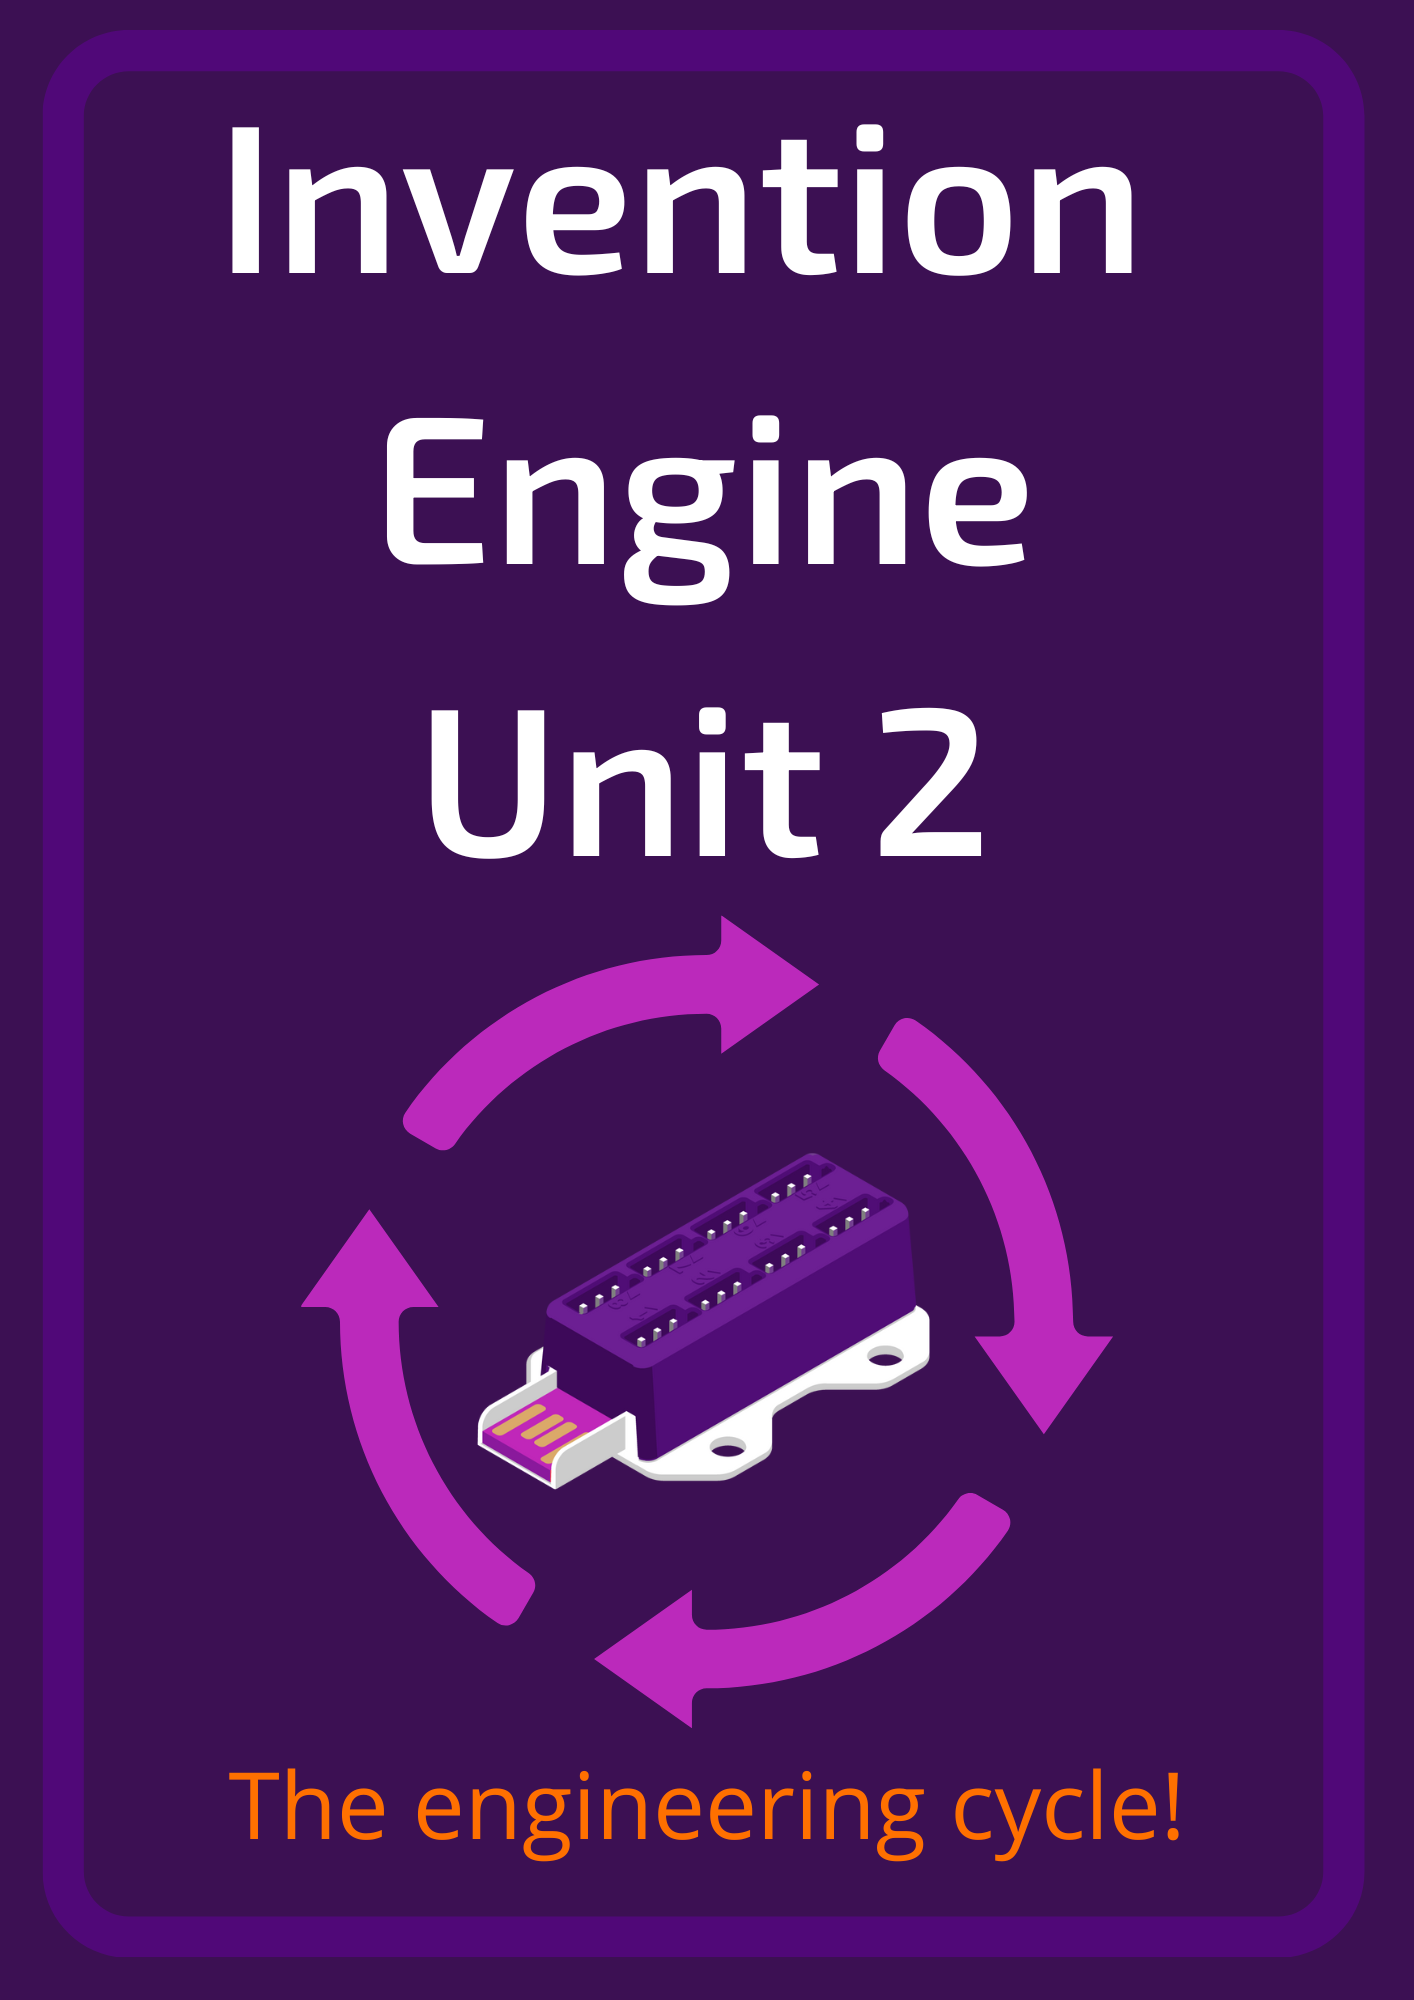 Invention Engine unit 2 image